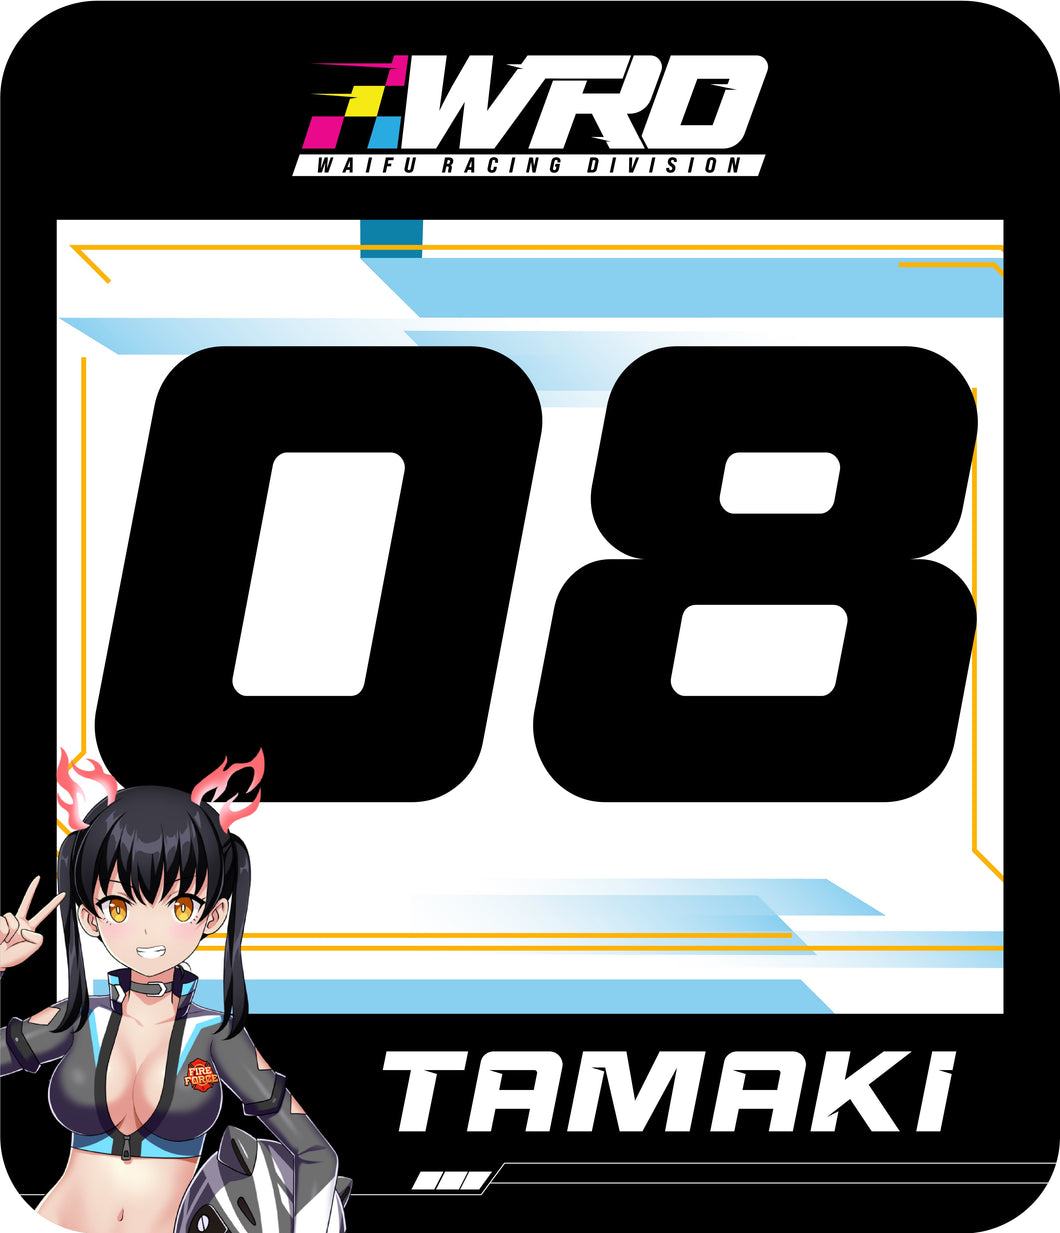 Tamaki Track Number (Set)